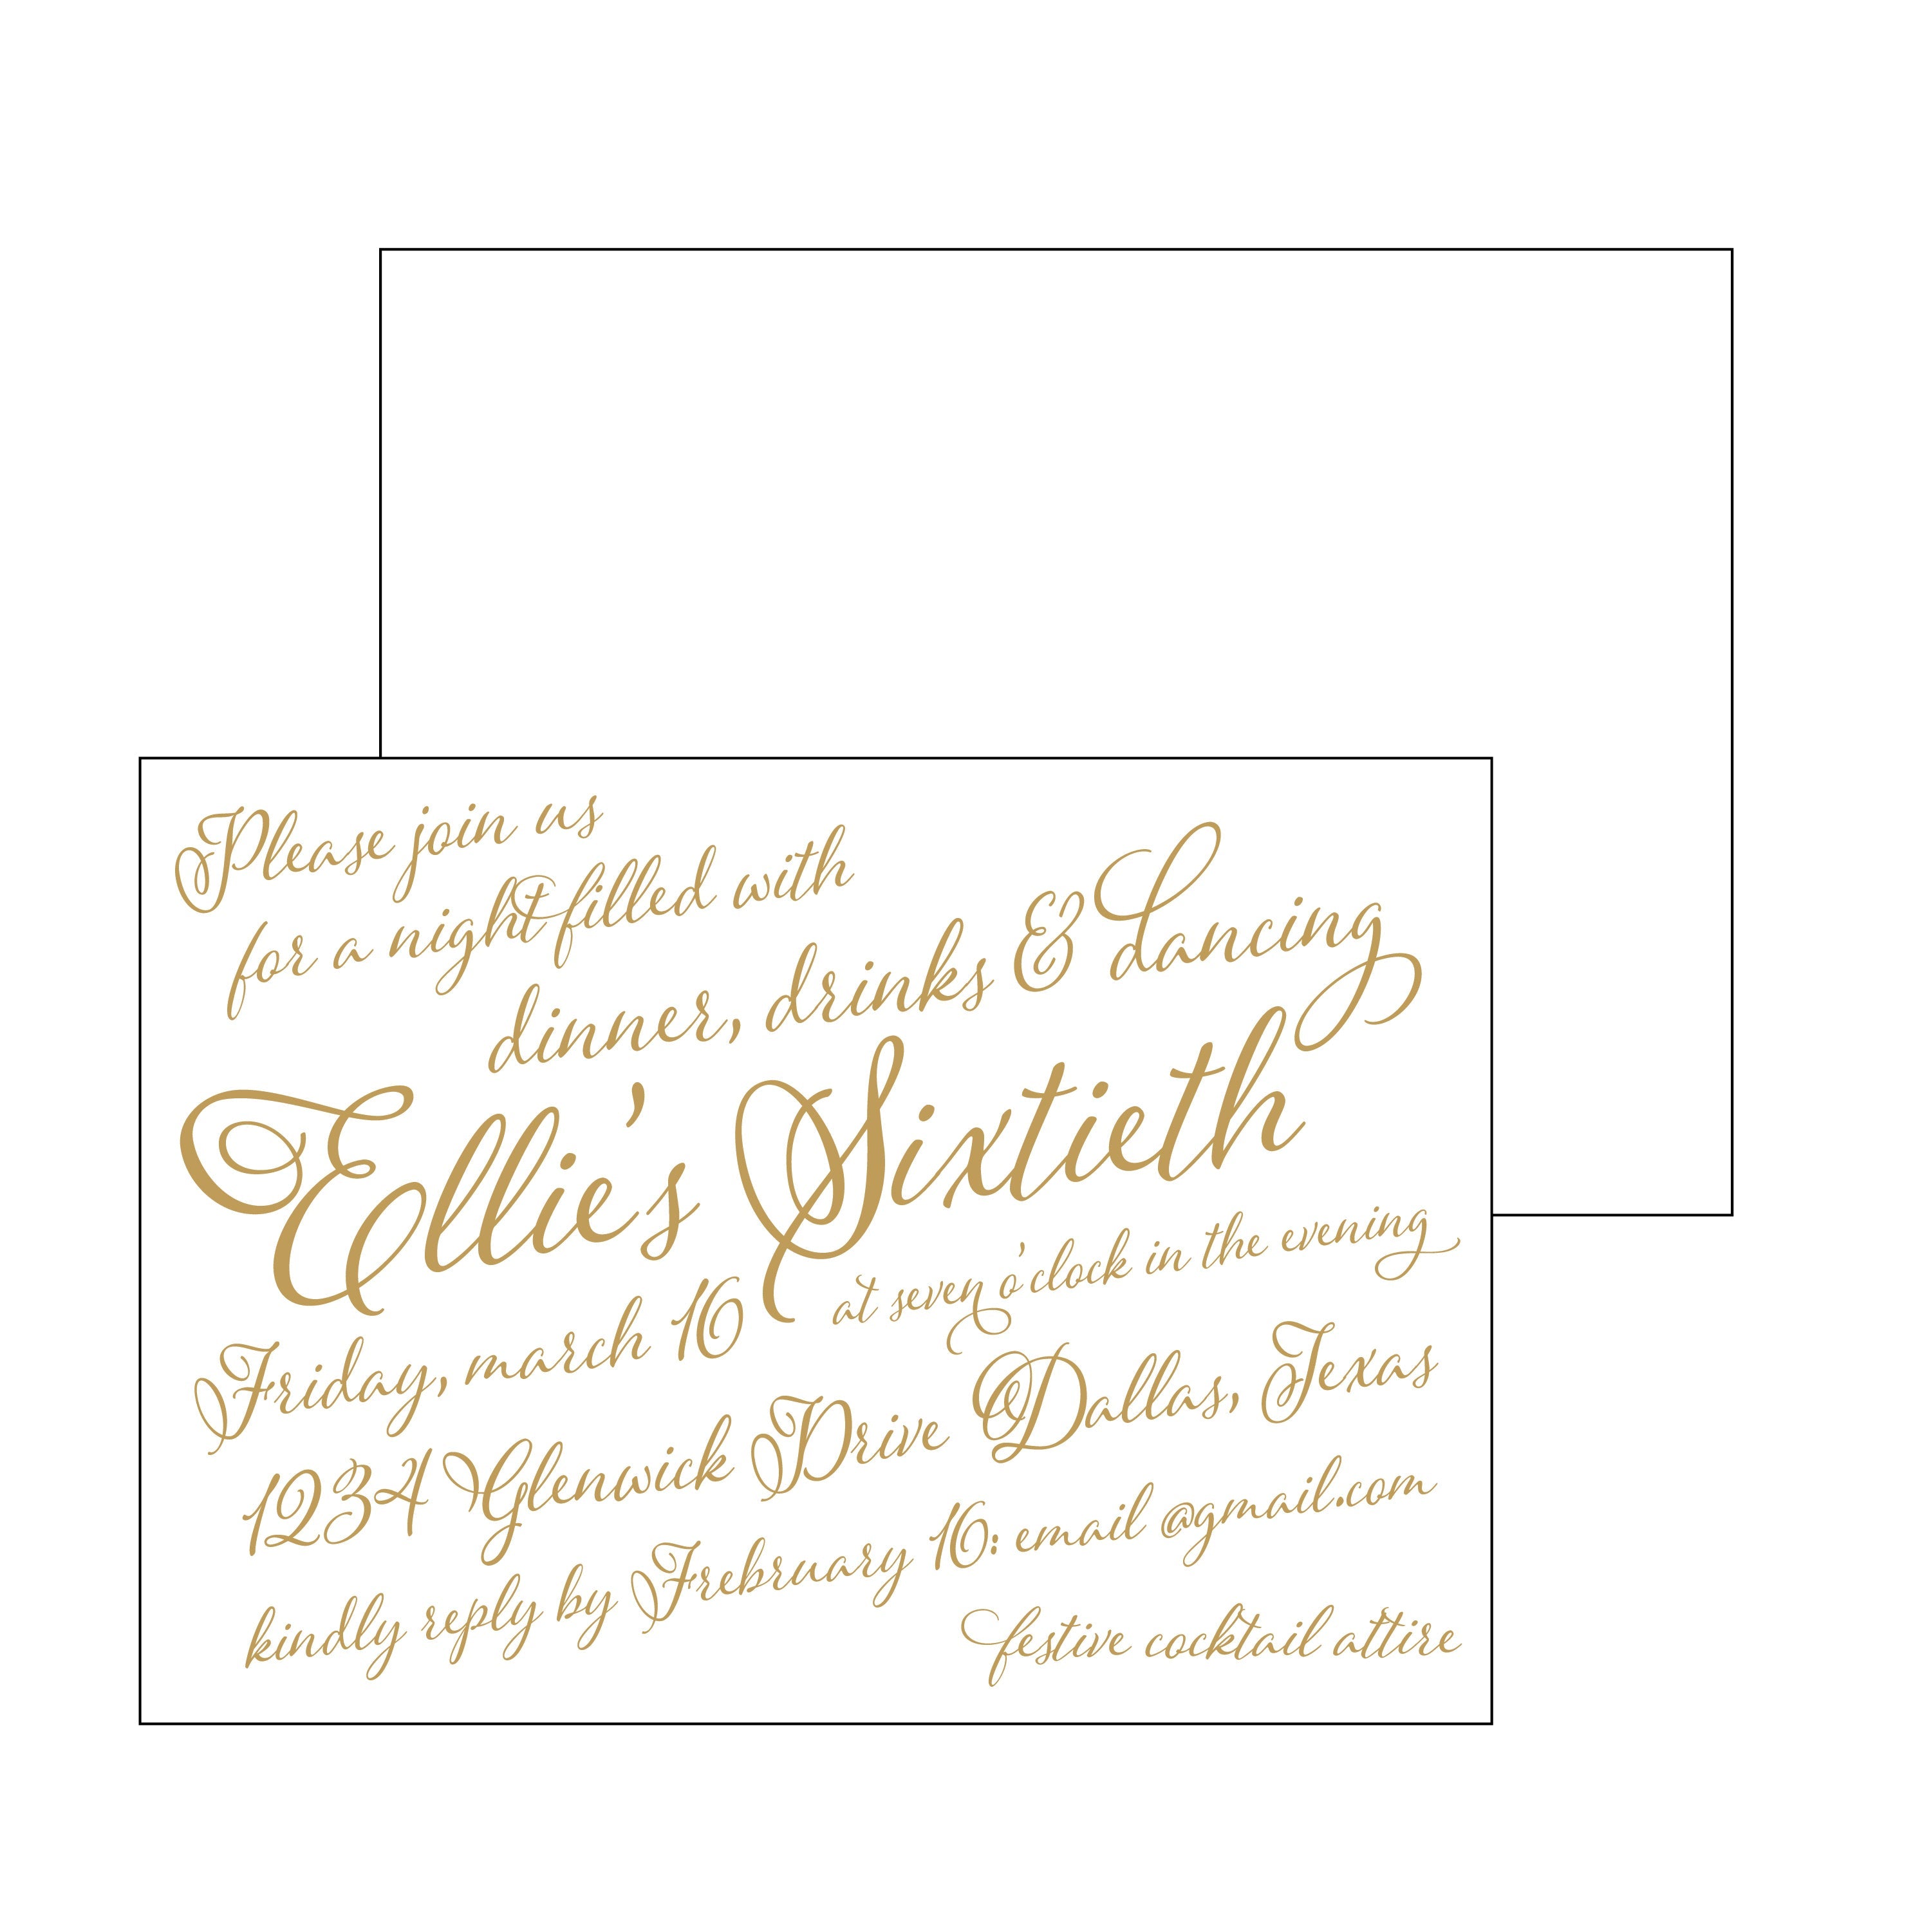 Back and white wedding monogrammed handwriting envelope  Monogram wedding,  Custom printed envelopes, Custom envelopes